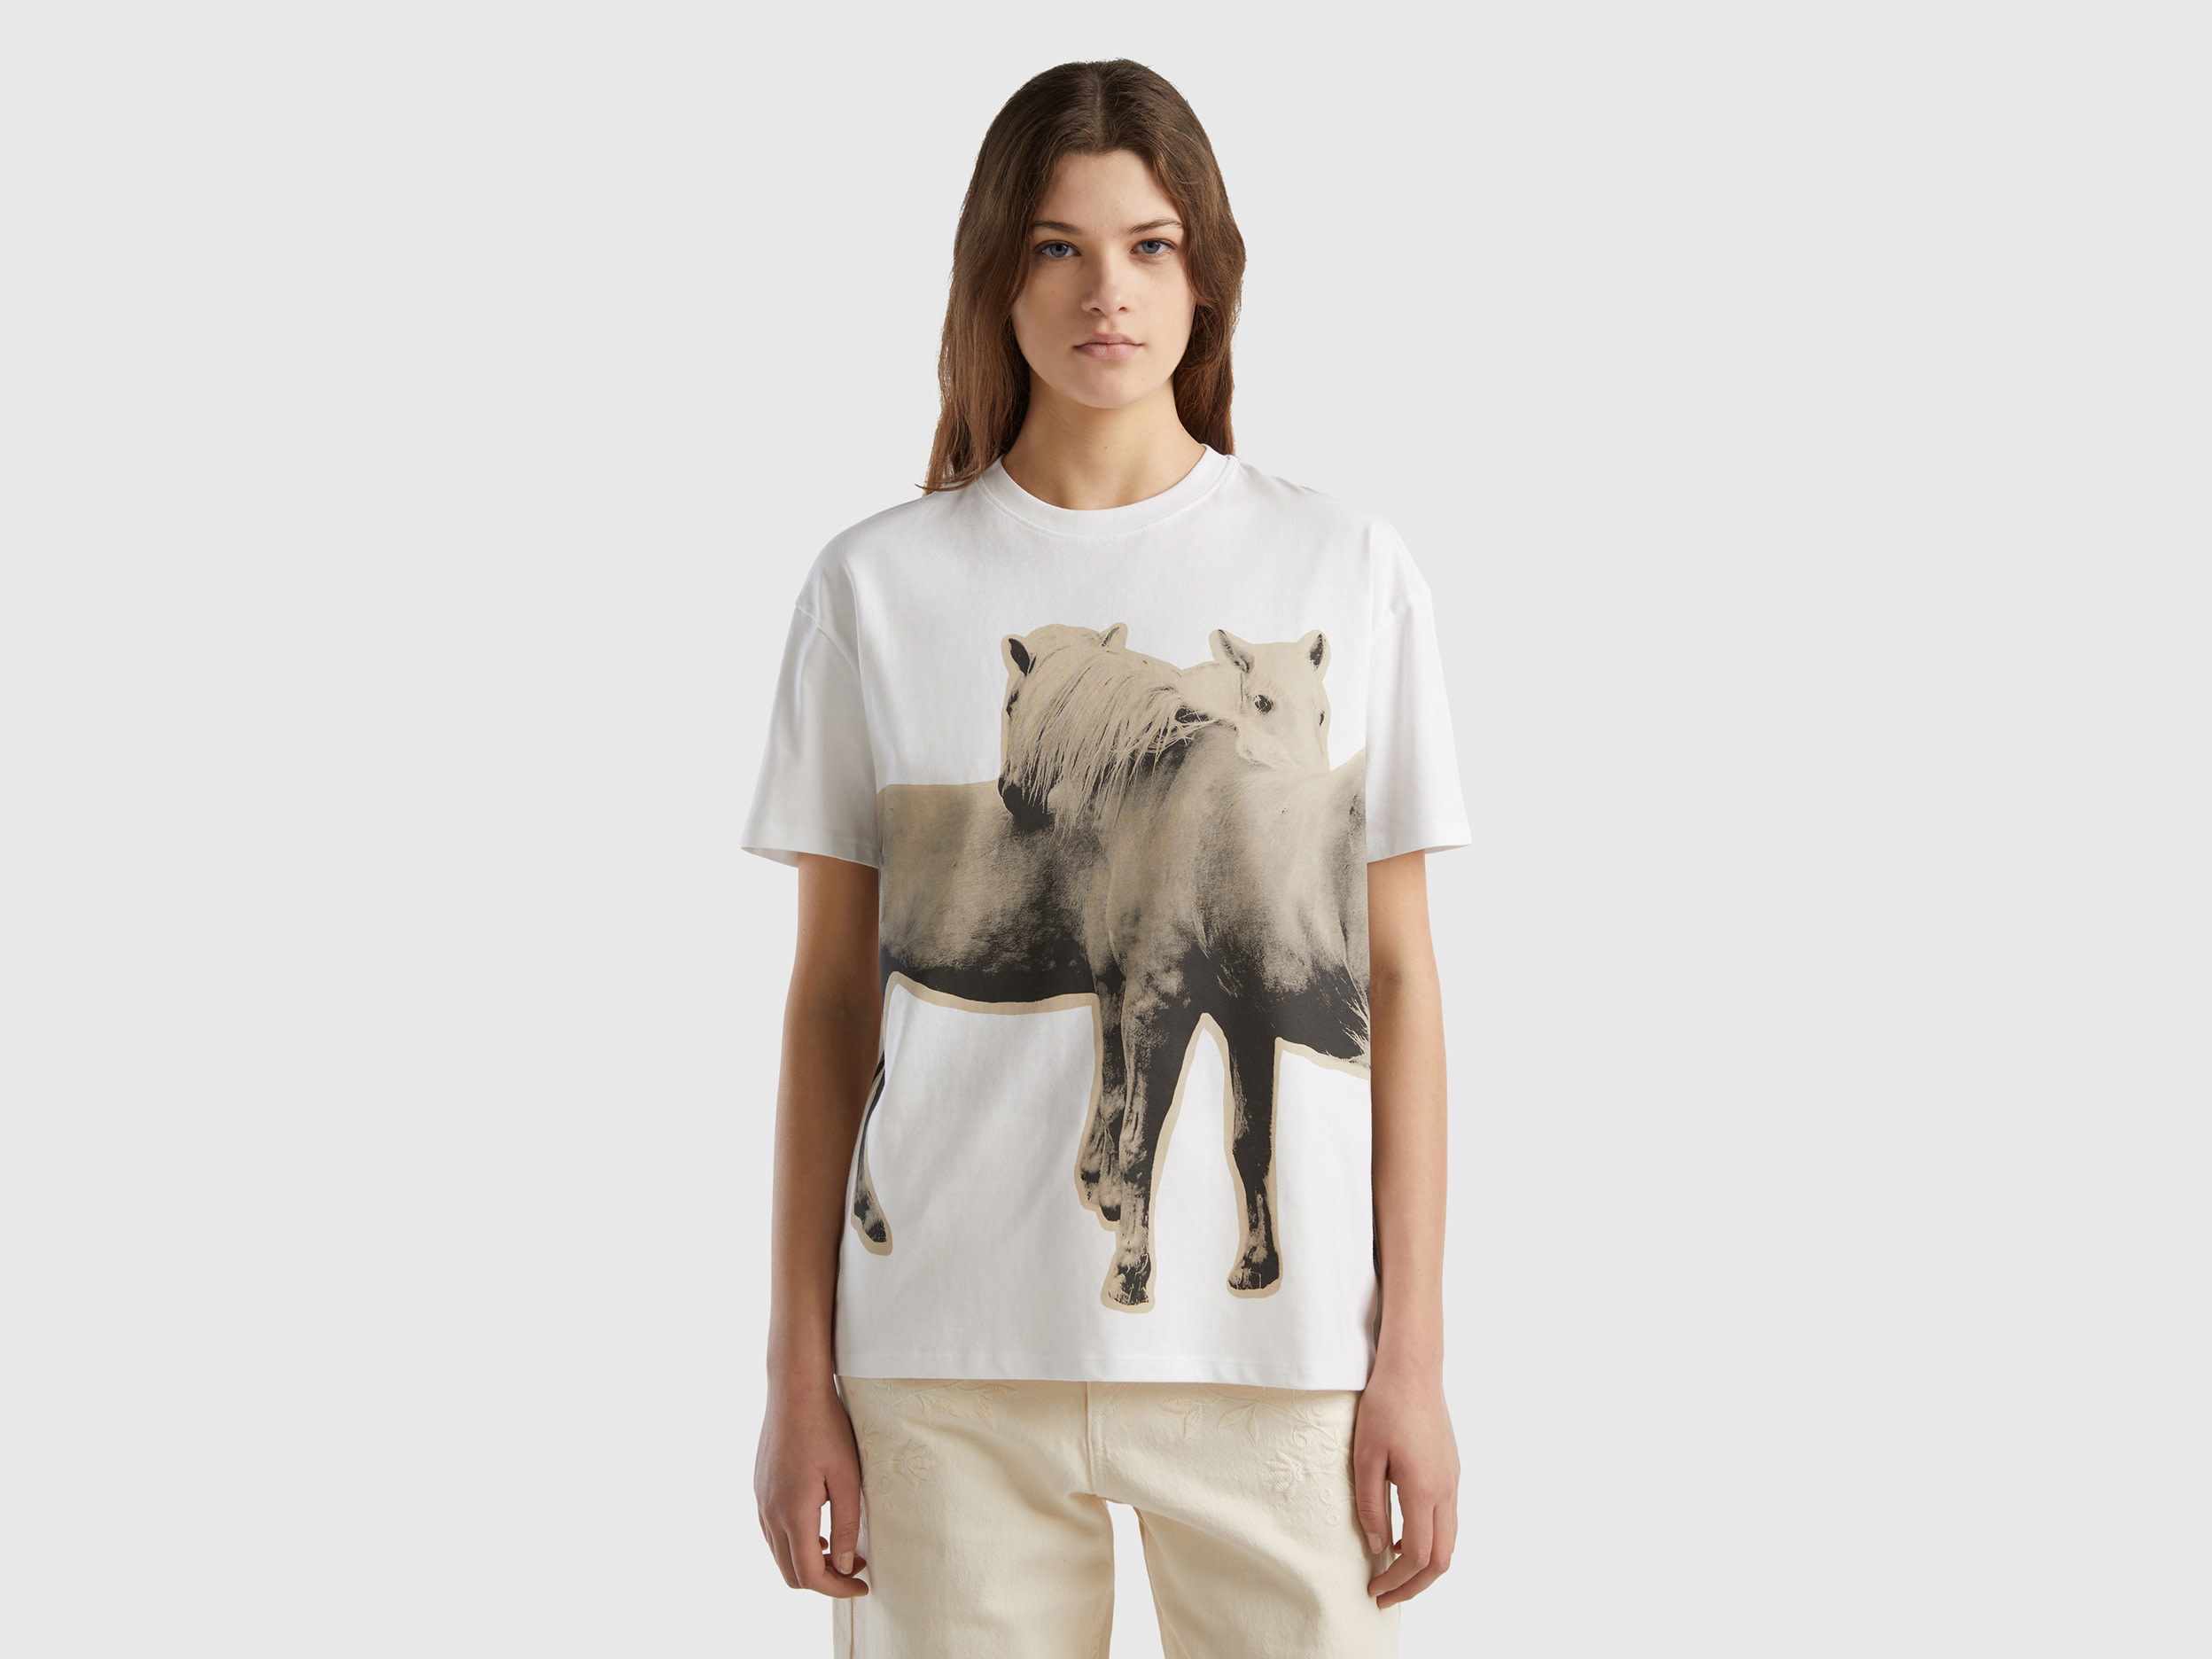 Benetton, Warm T-shirt With Horse Print, size M, White, Women